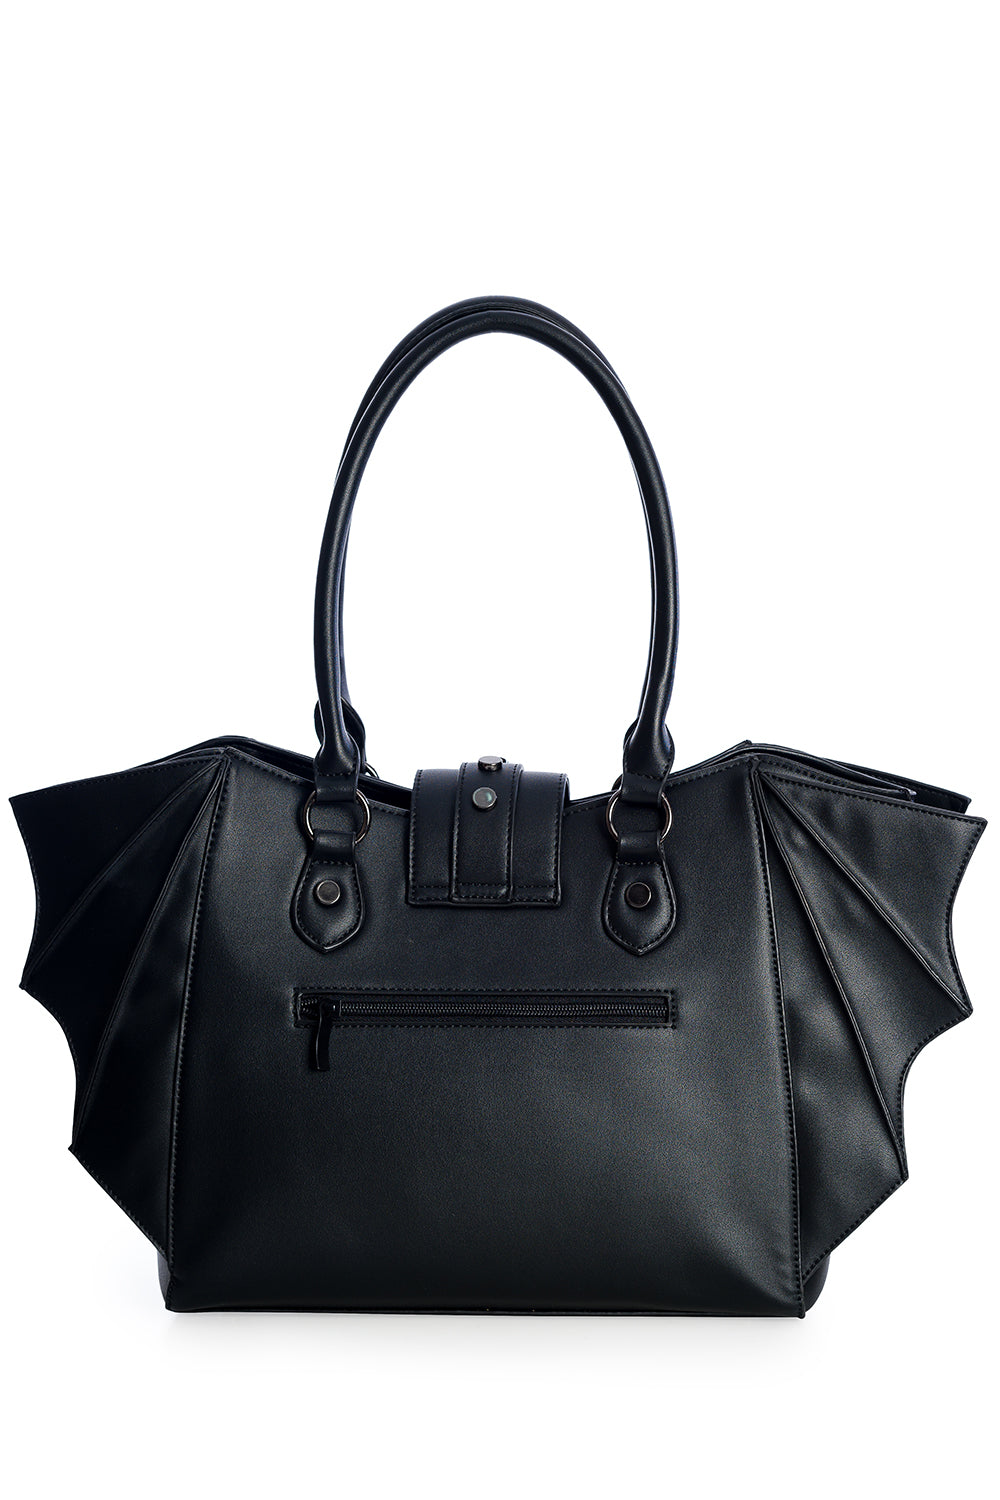 Black handbag with bat wing style side